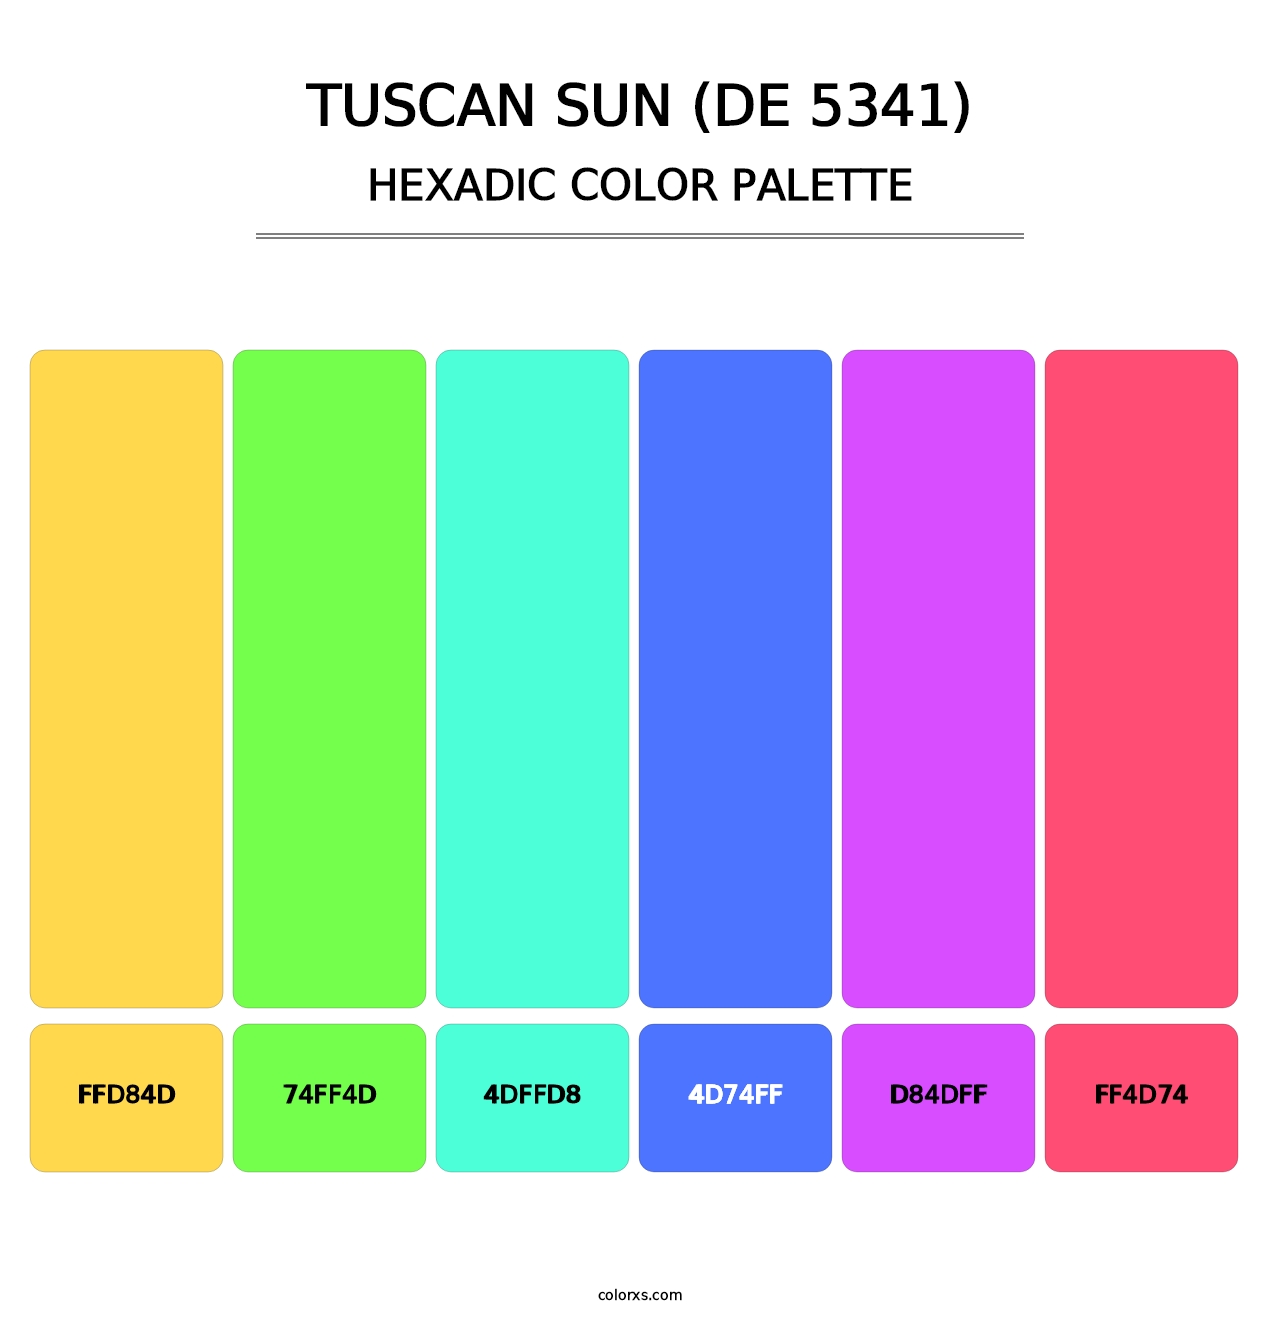 Tuscan Sun (DE 5341) - Hexadic Color Palette